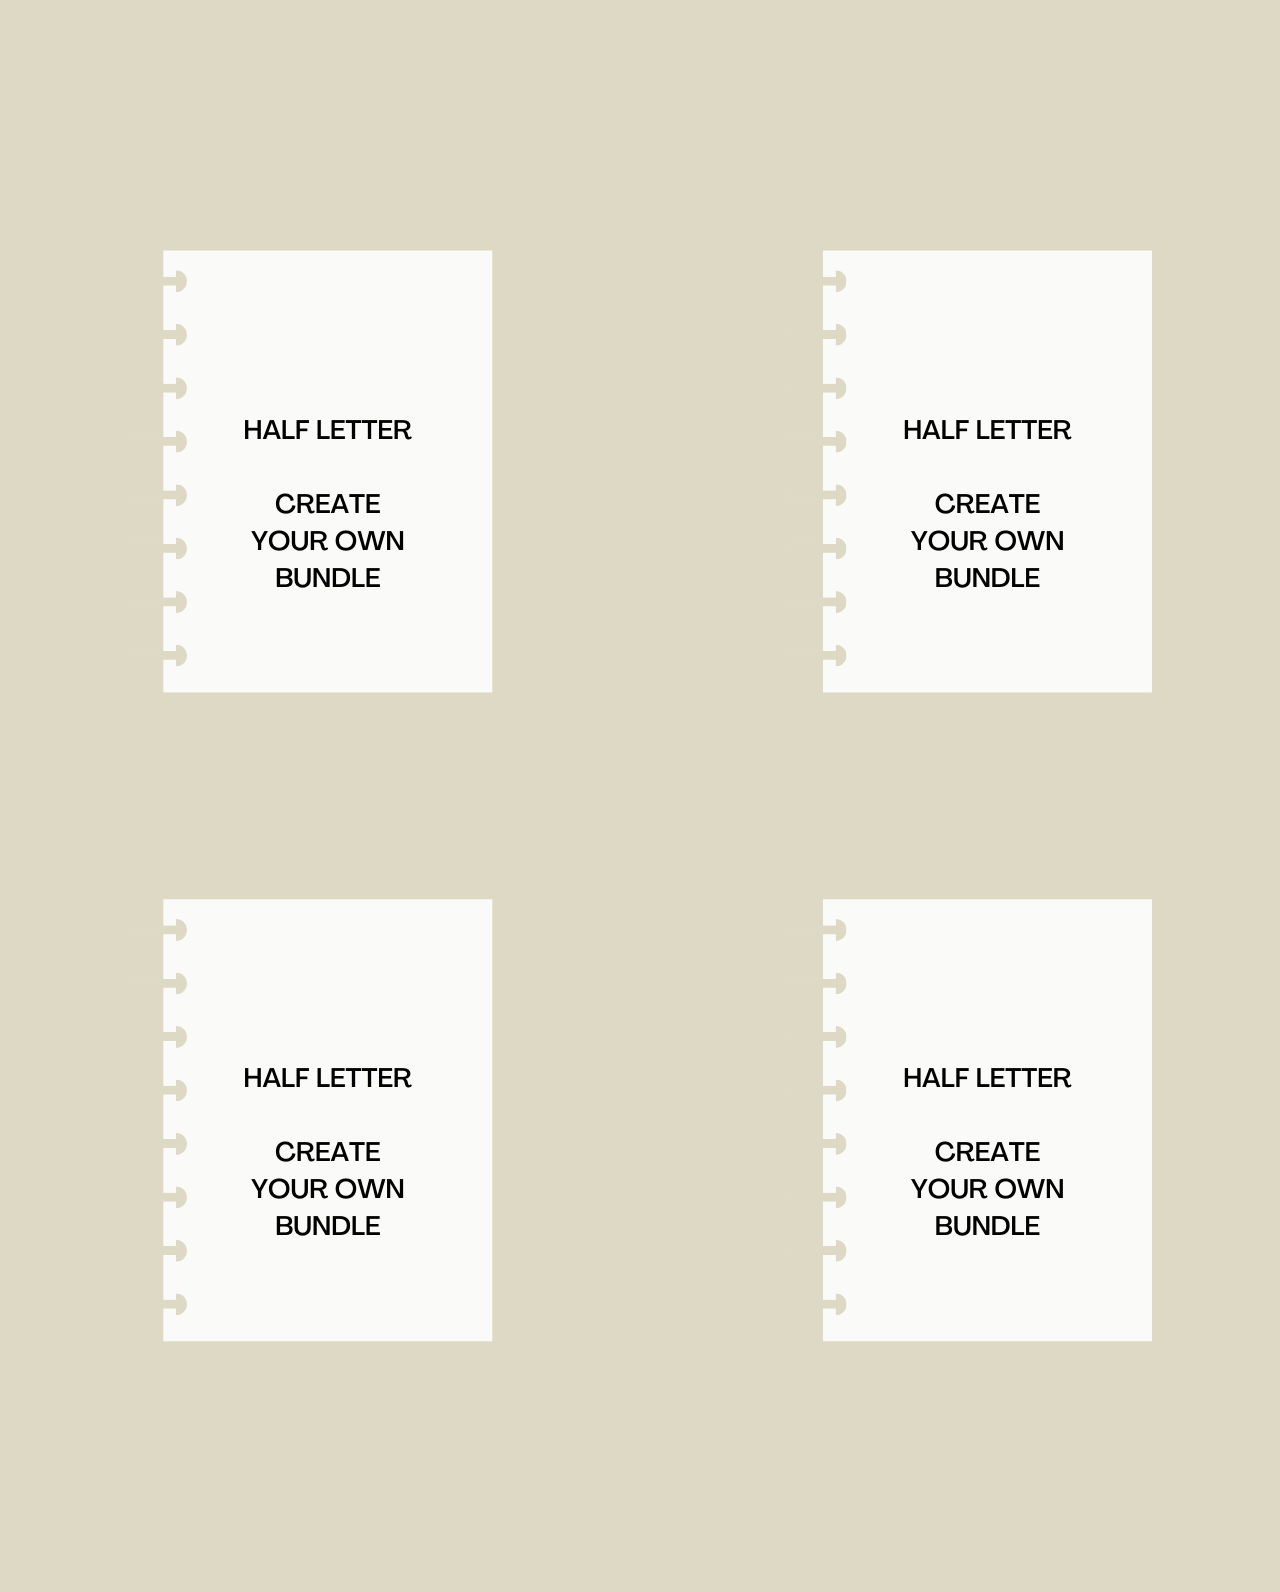 Half Letter Discbound - Create Your Own Starter Kit